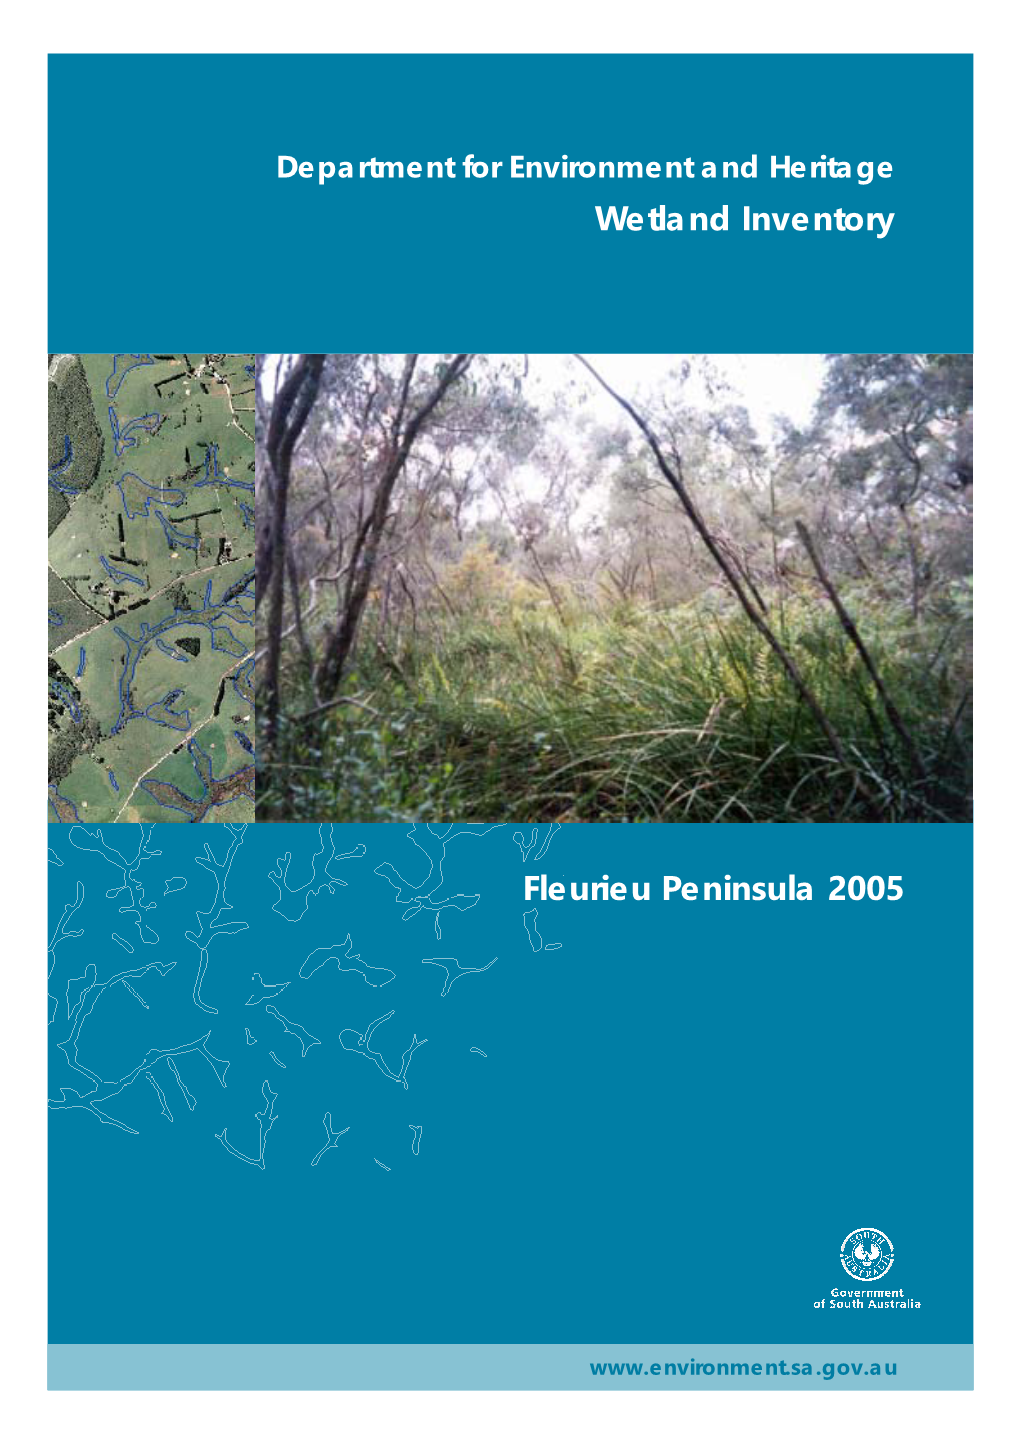 Fleurieu Peninsula Wetland Inventory 2005: Introduction and Section 1